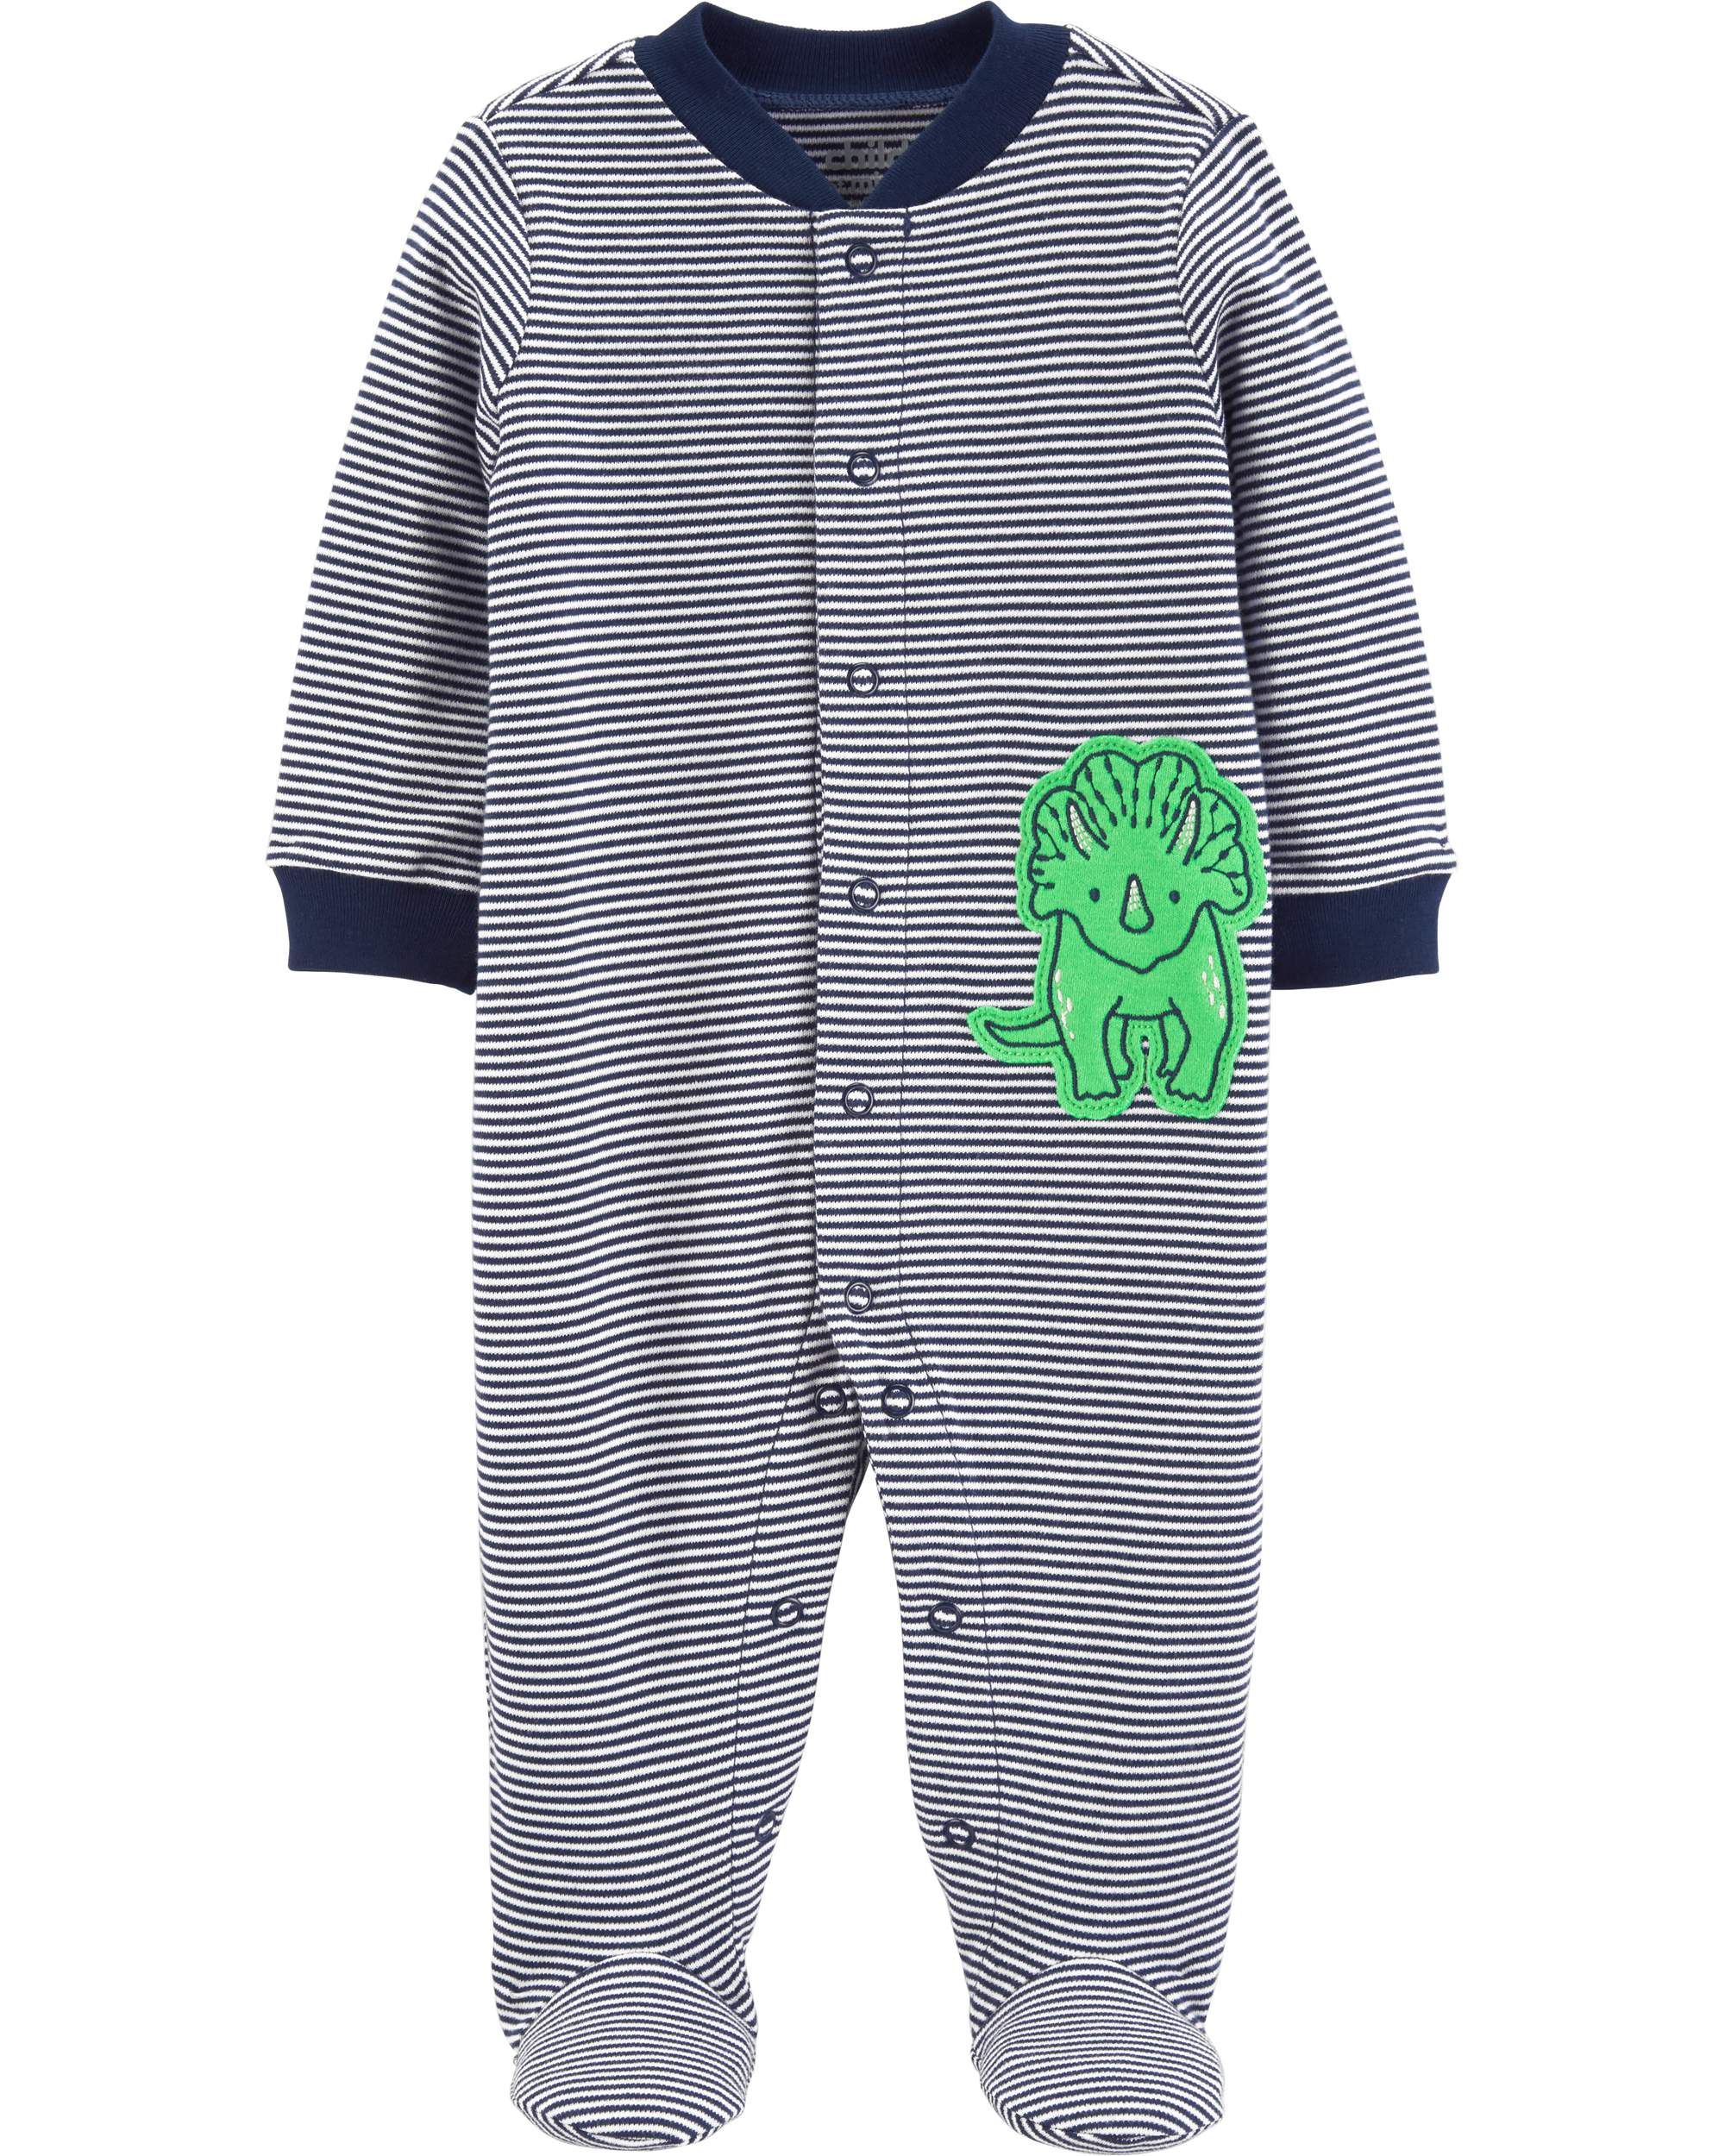 Carter's Child of Mine Baby Boy Snap-up Sleep 'N Play Pajamas - image 1 of 4